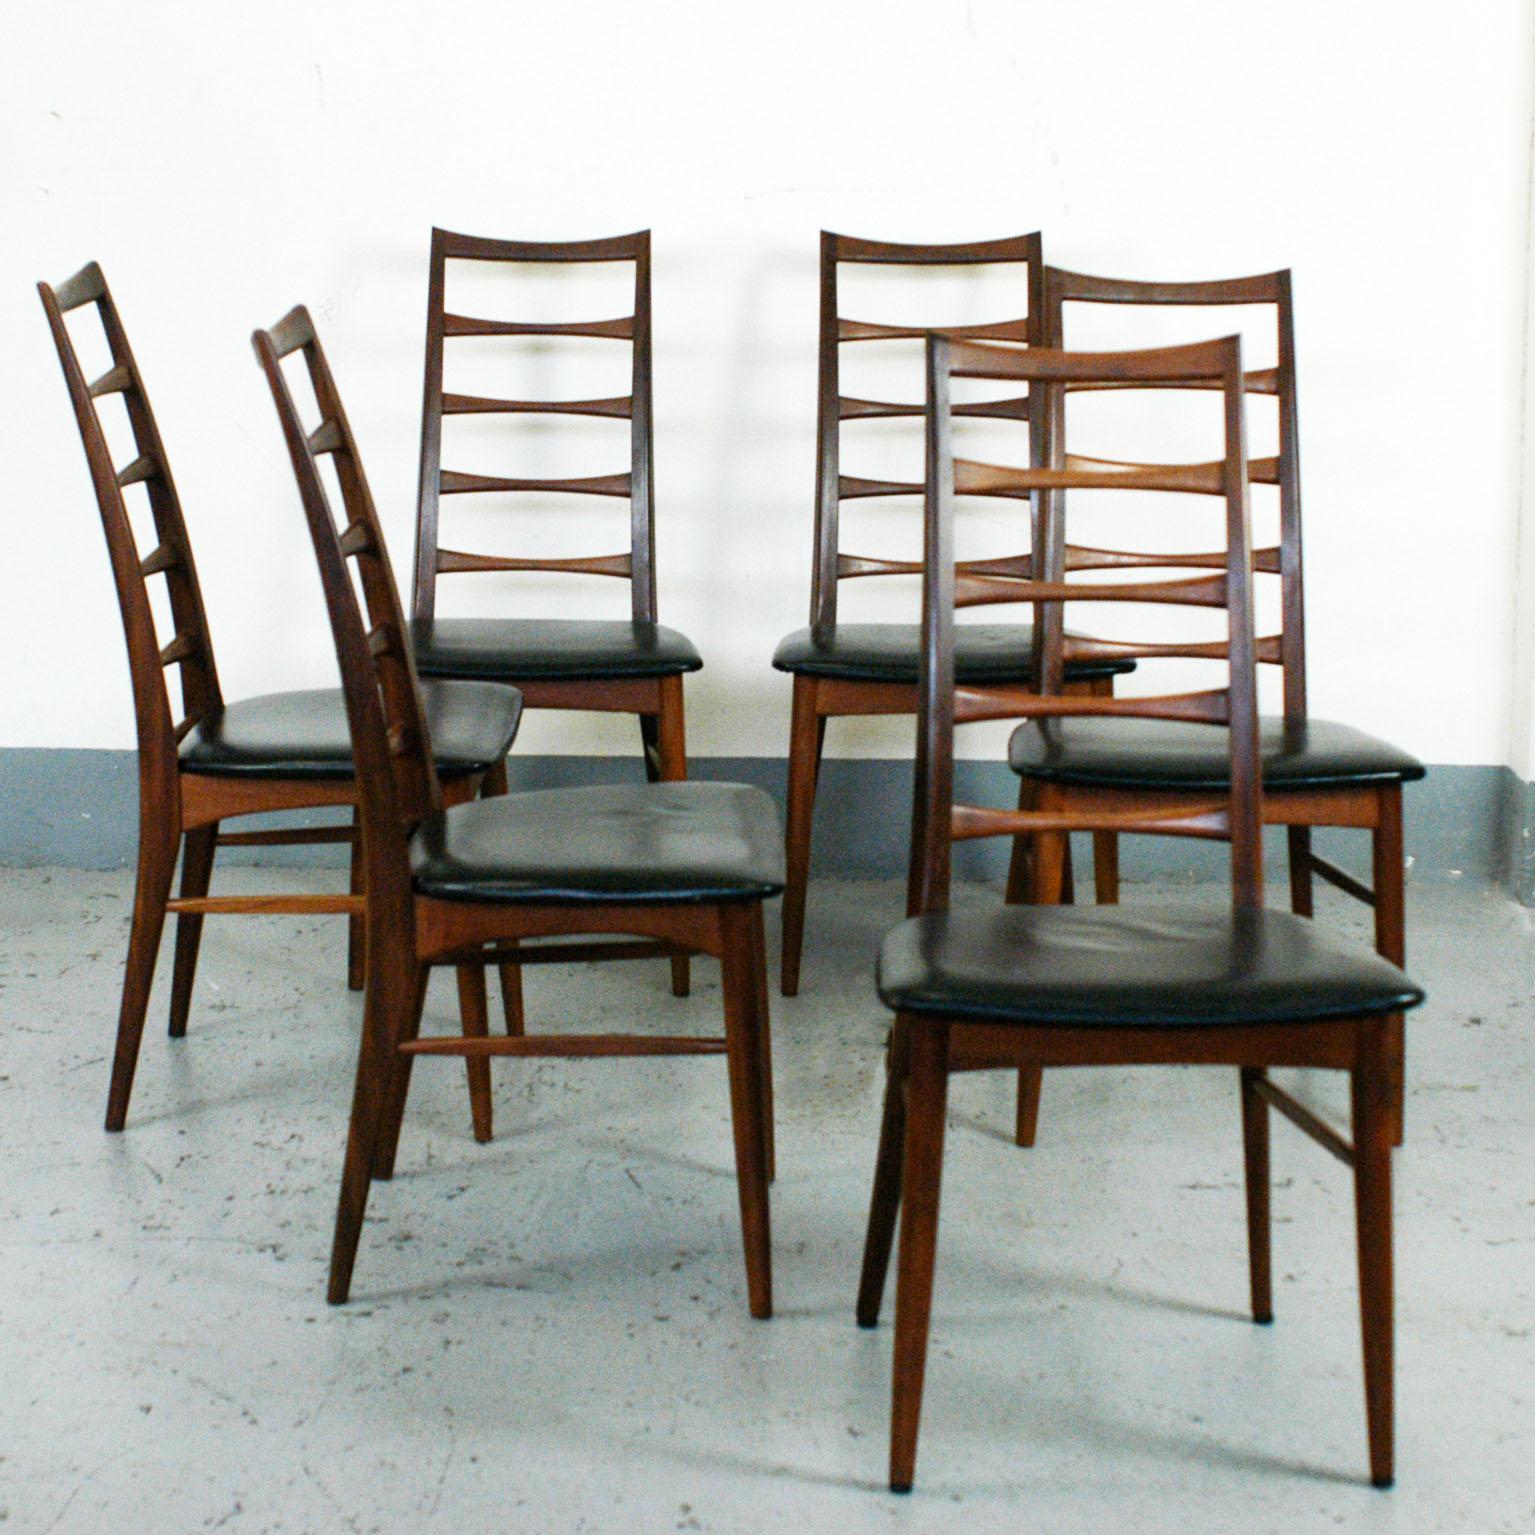 Set of Six Scandinavian Modern Teak Dining Chairs by N. Koefoeds for Hornslet 1